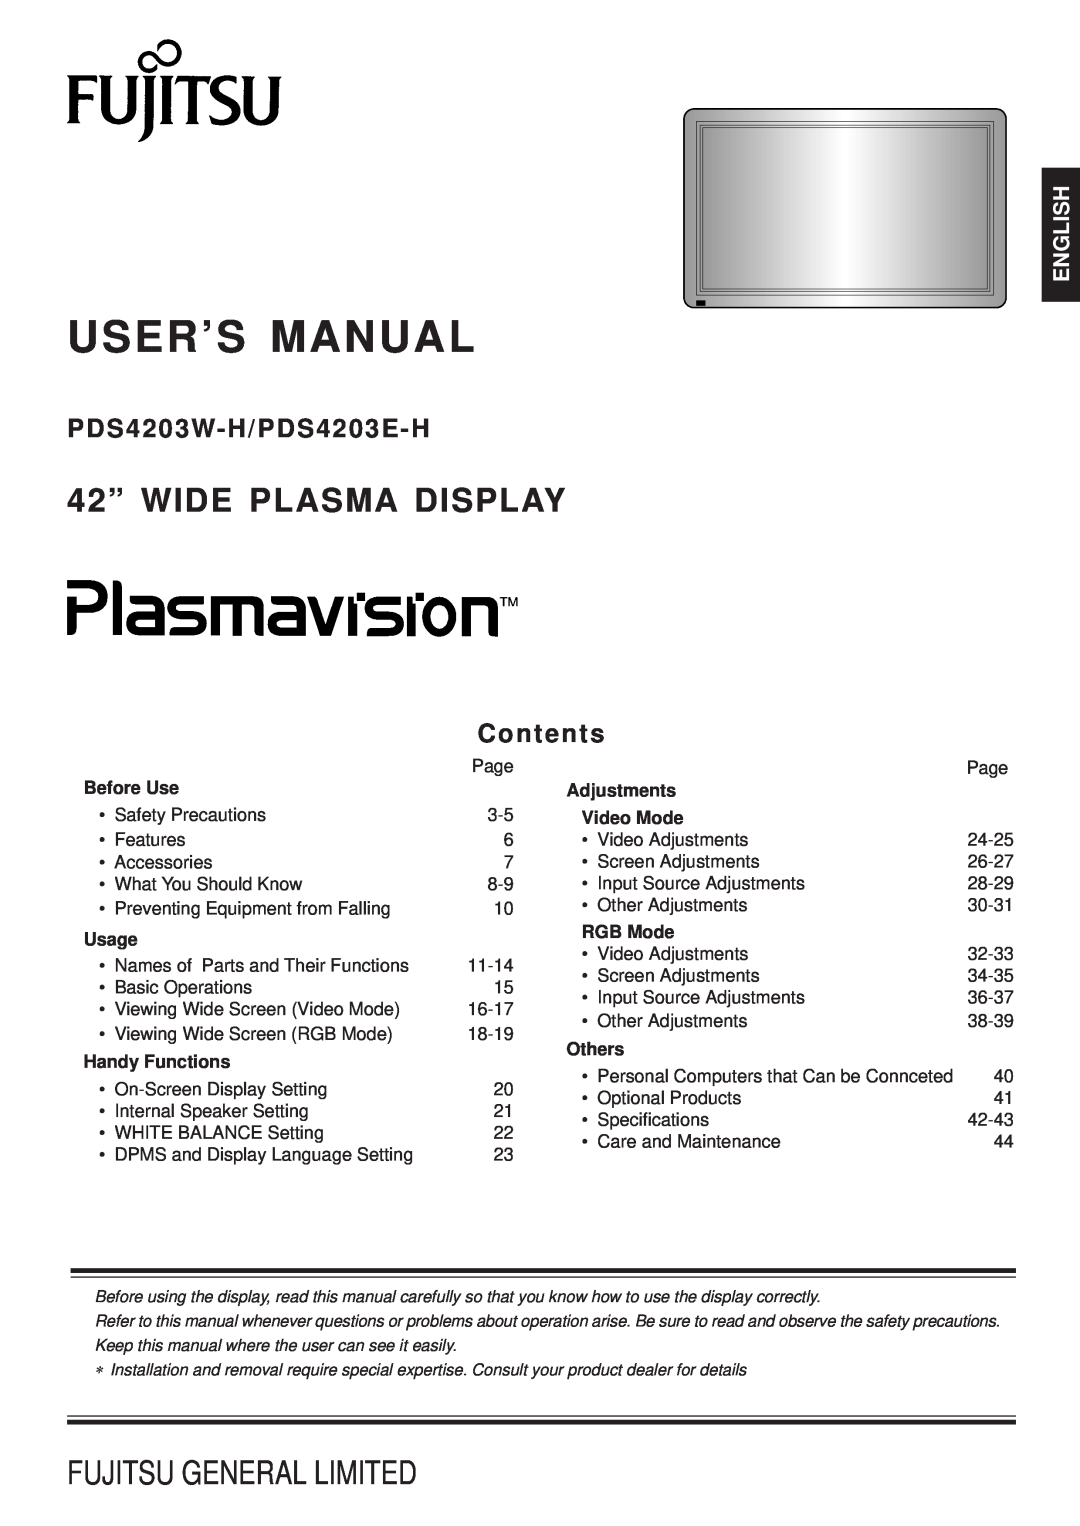 Fujitsu PDS4203W-H / PDS4203E-H user manual User’S Manual, 42” WIDE PLASMA DISPLAY, PD S4 2 0 3 W- H/P DS 4 2 0 3 E -H 